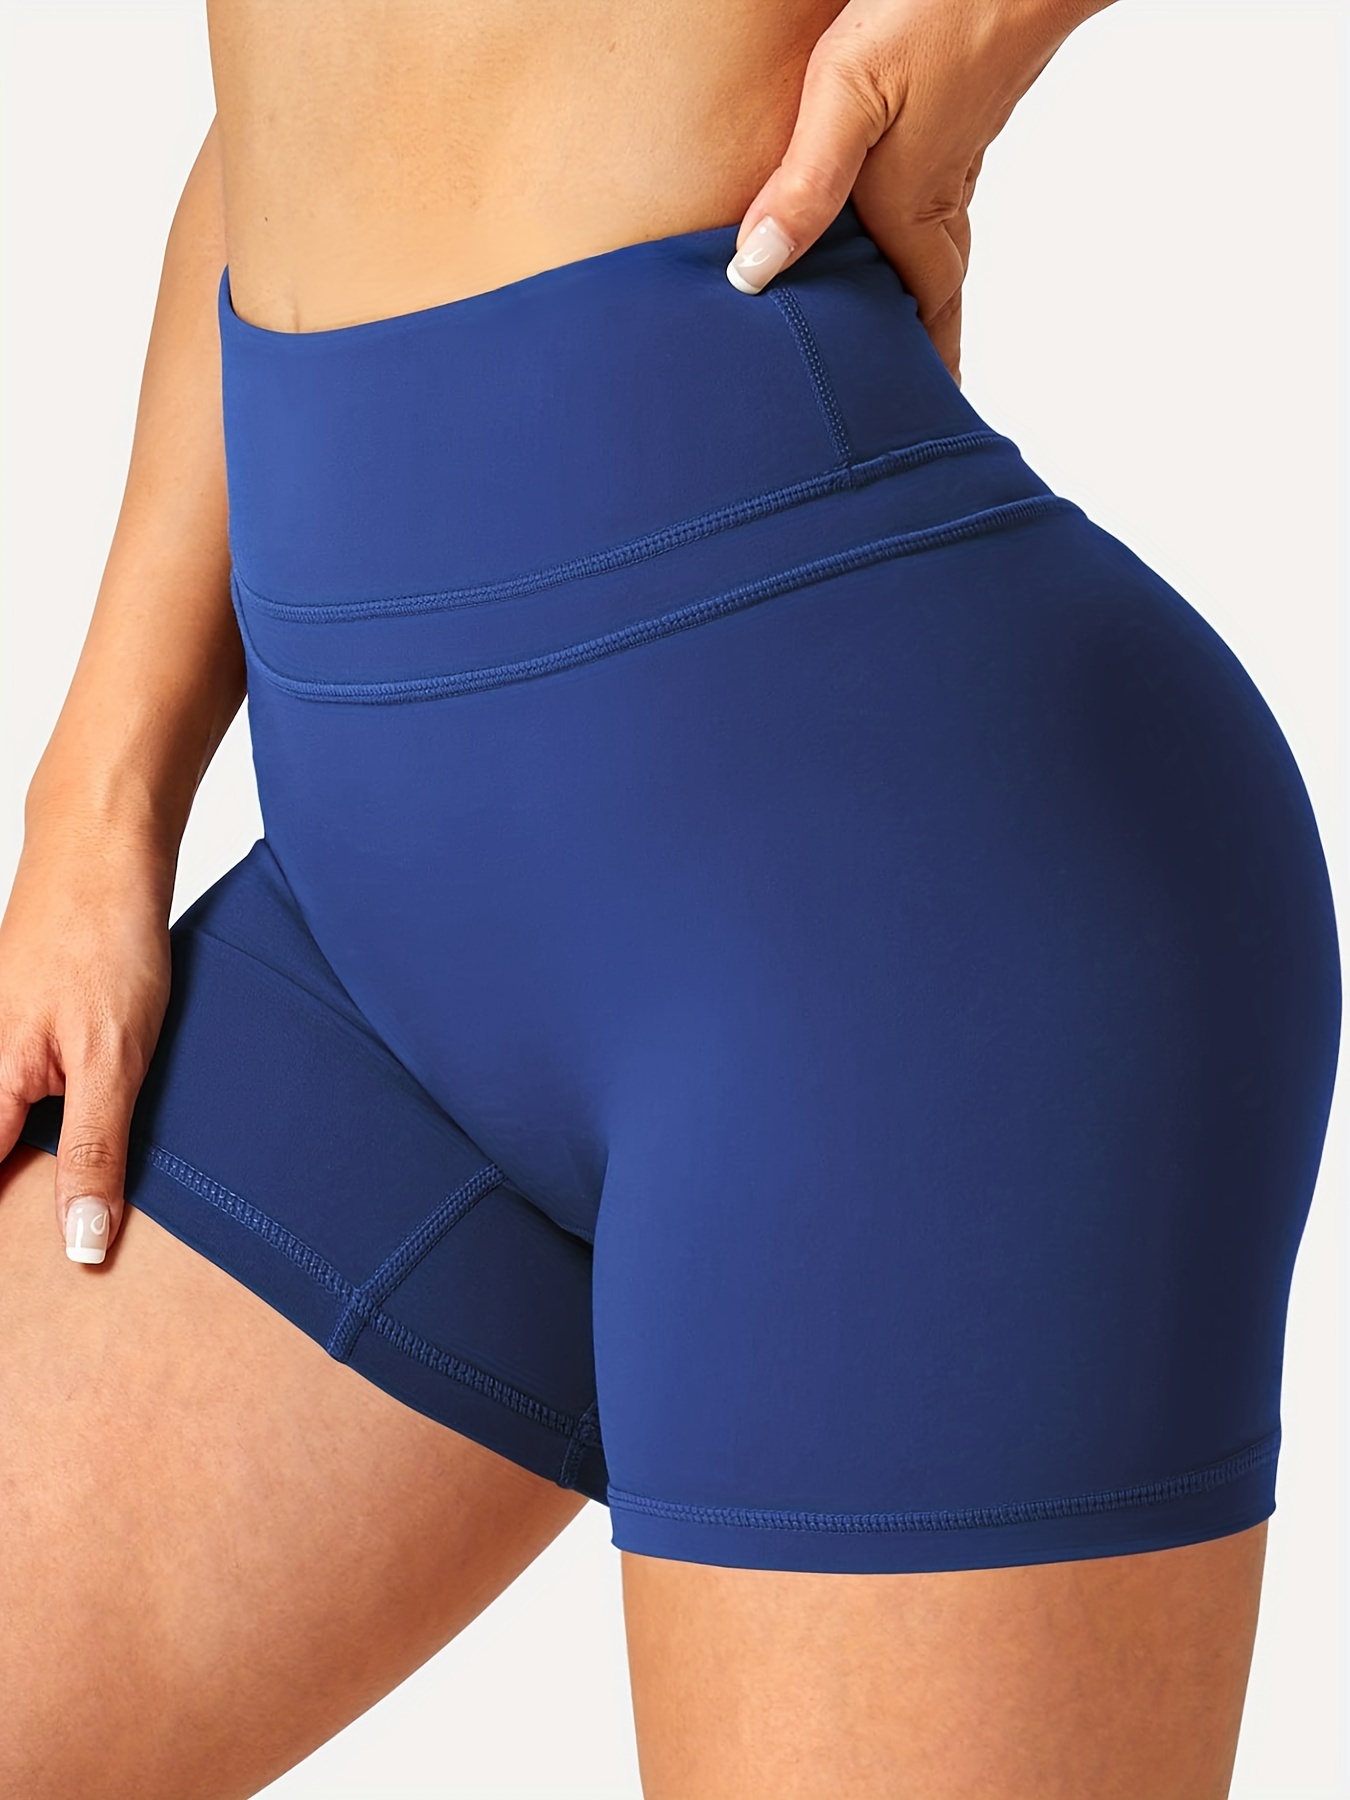 MRULIC yoga pants Women Seamless High Waist Shorts Biker Shorts Yoga  Workout Short Pants yoga pants women Dark blue + L 